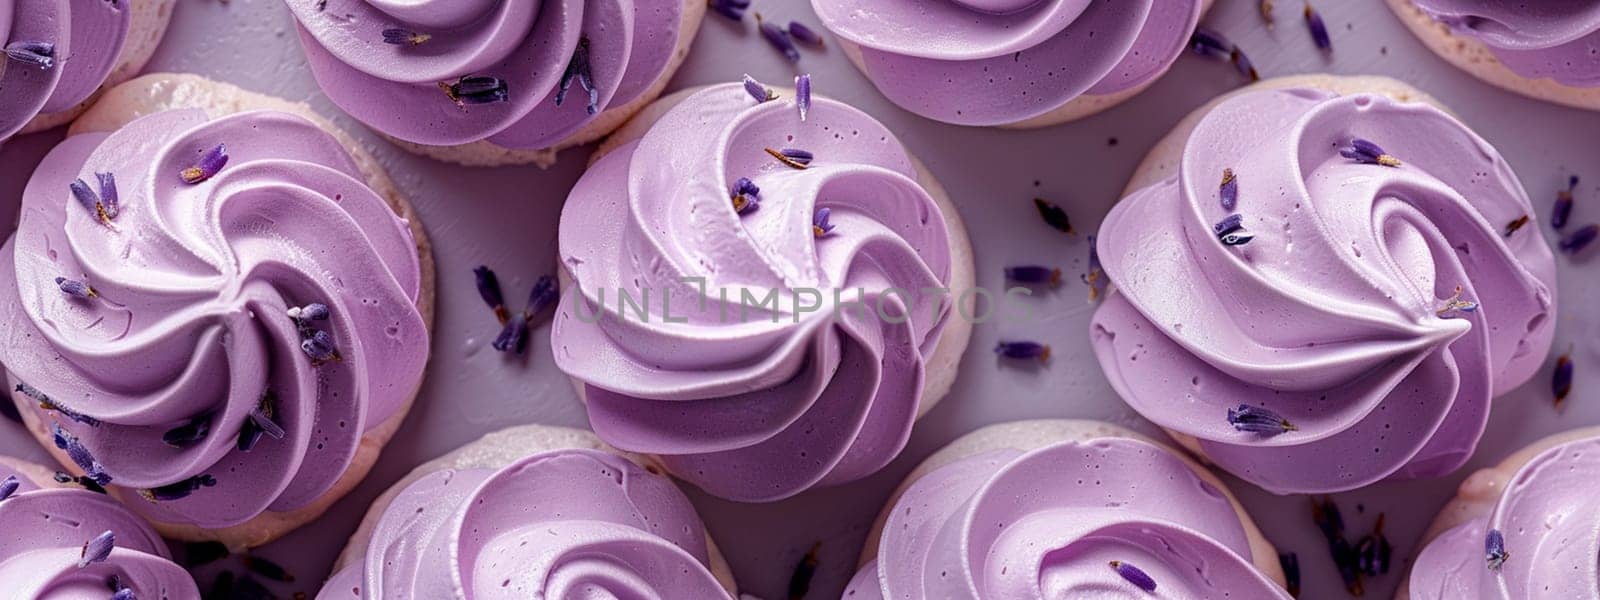 Meringue with lavender close-up. Selective focus. by yanadjana